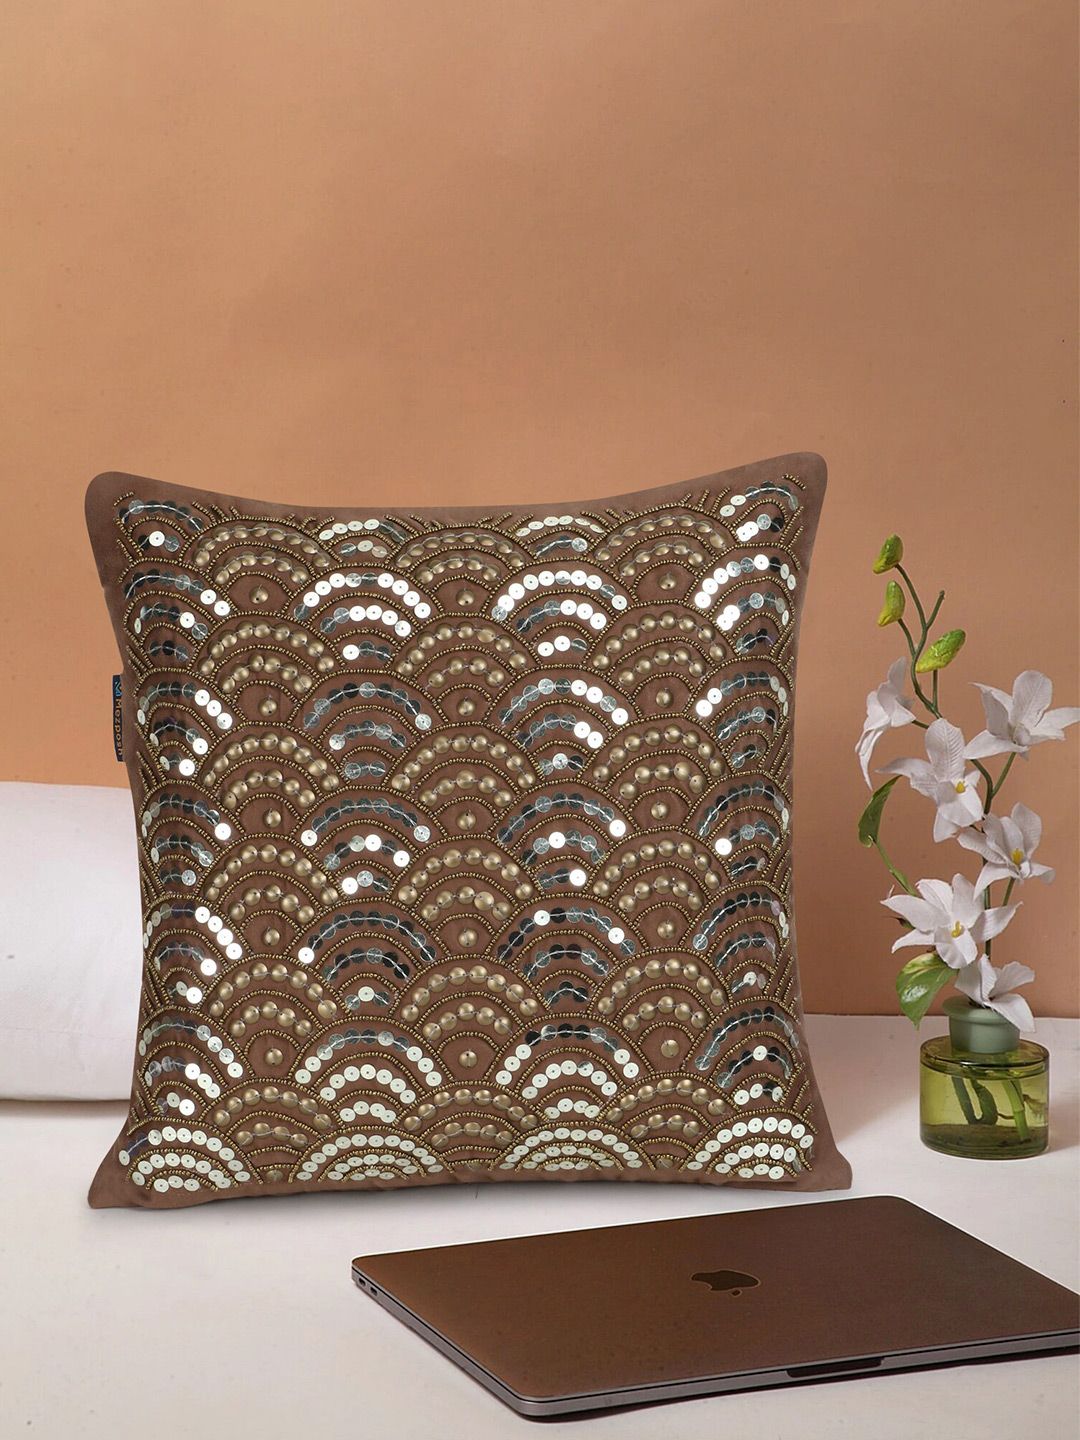 Mezposh Camel Brown & Gunmetal-Toned Embellished Satin Square Cushion Covers Price in India